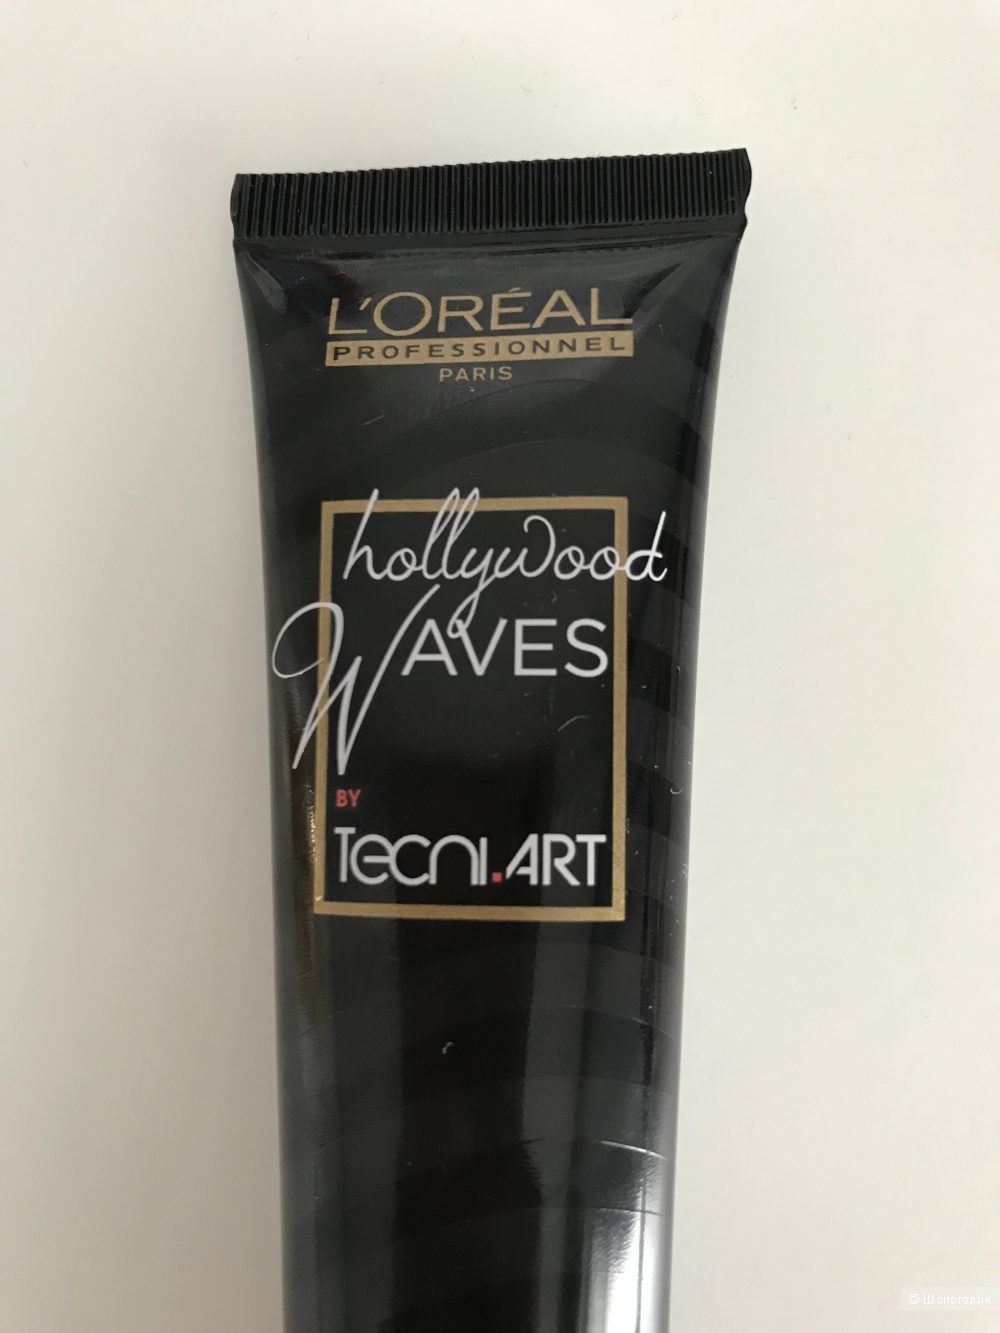 Крем для укладки волос L'Oreal Professionnel Hollywood waves